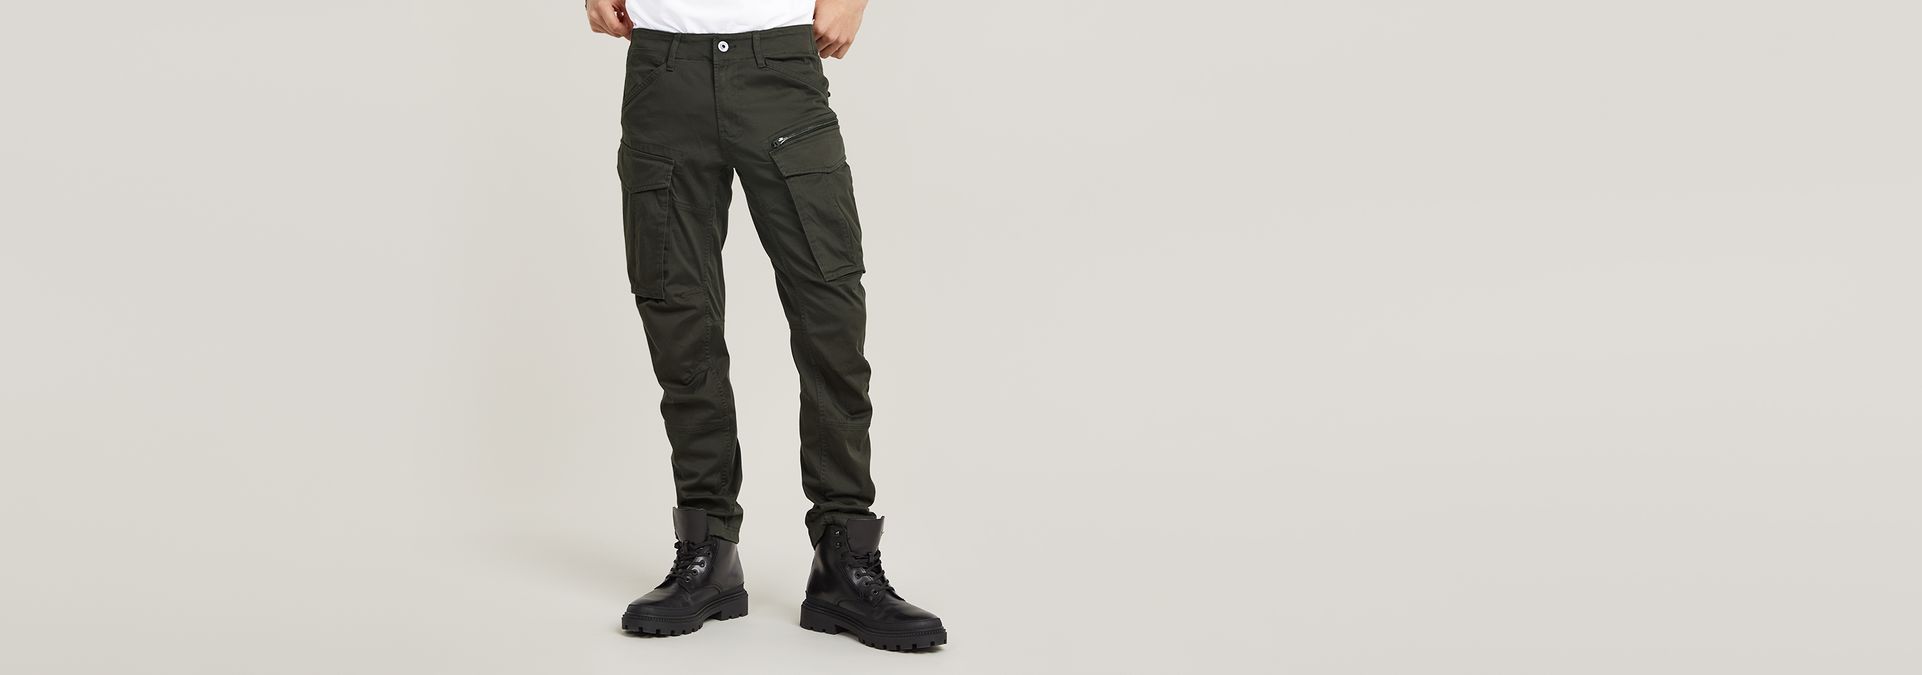 G-star Rovic Zip 3D Regular Tapered Pants